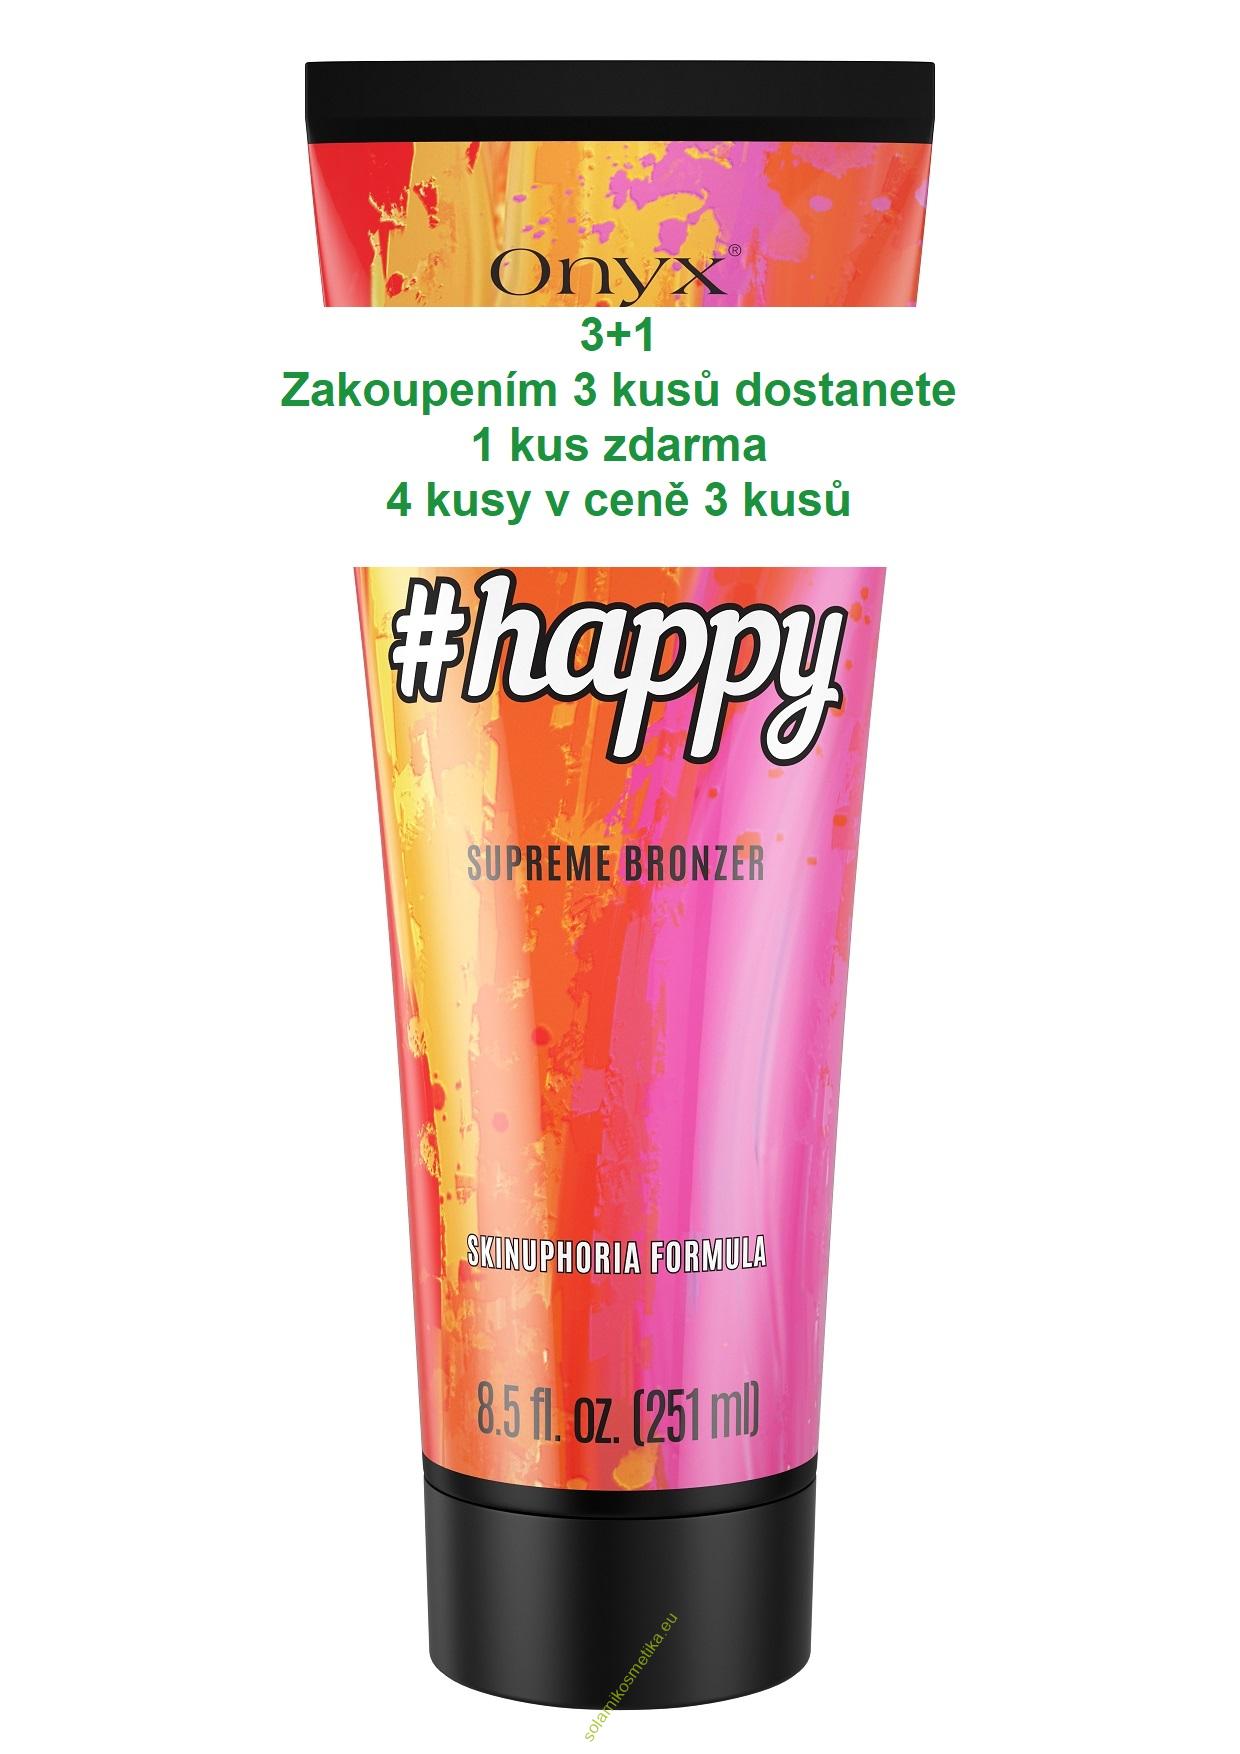 #HAPPY  SUPREME BRONZER   251 ml   solární kosmetika